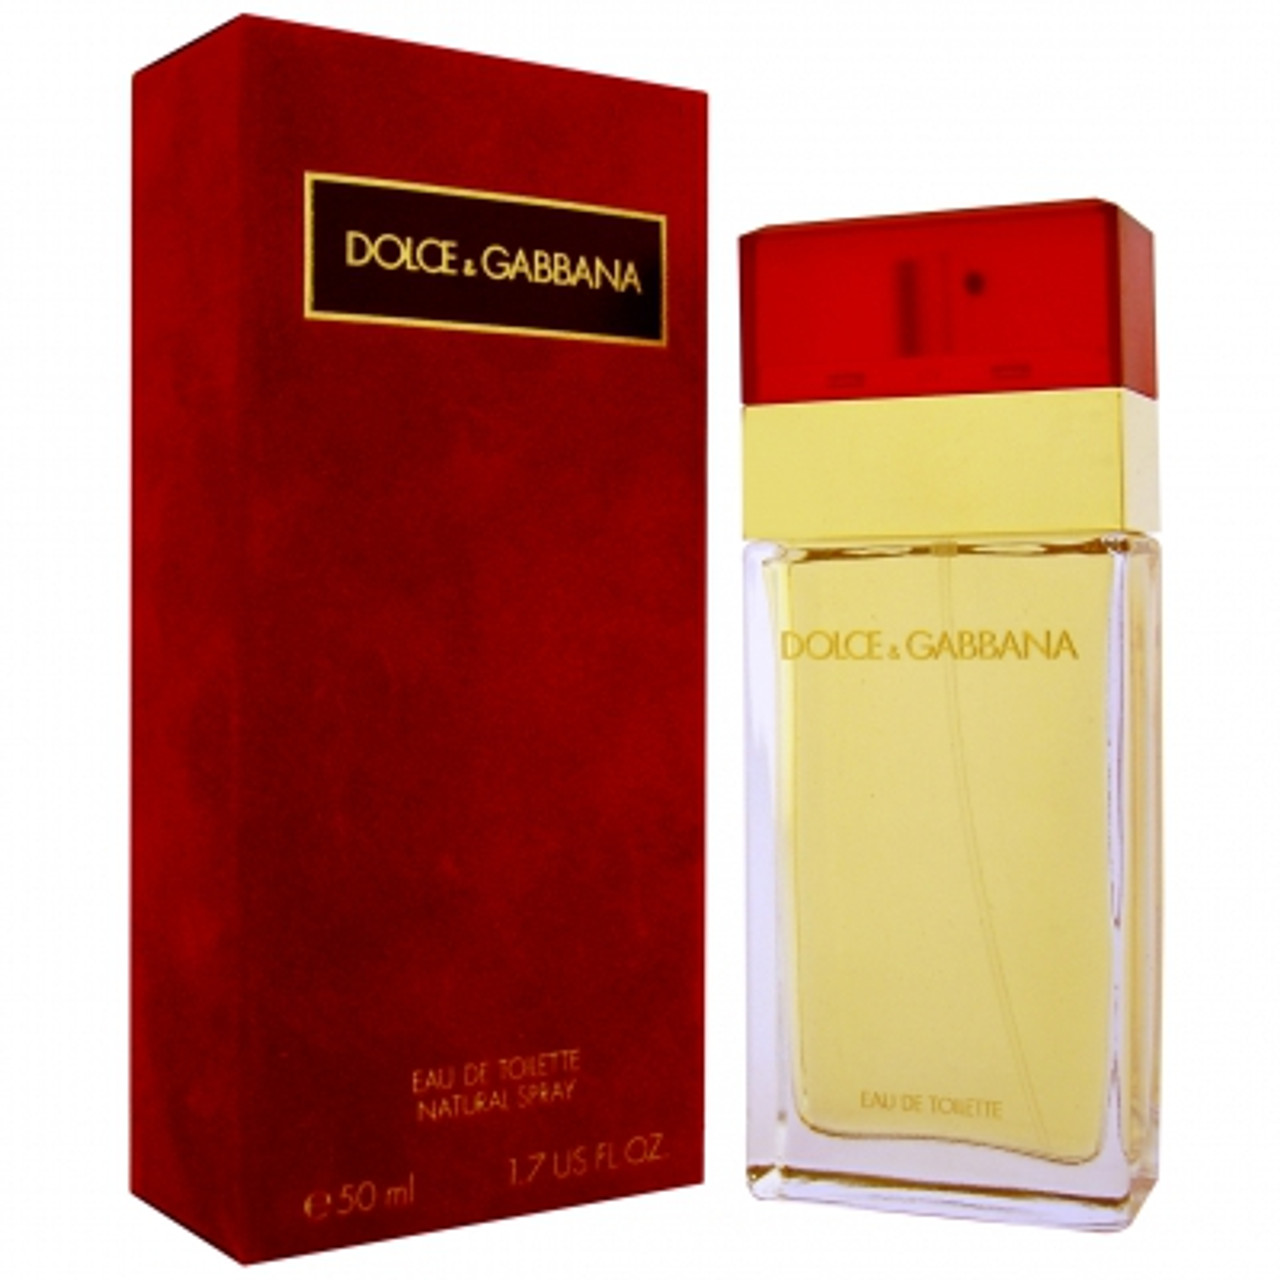 Dolce gabbana красные. Dolce Gabbana Classic Red 25ml. Dolce Gabbana pour femme 25ml. Духи Dolce Gabbana Red. Дольчигаббанопарфюм 1992.